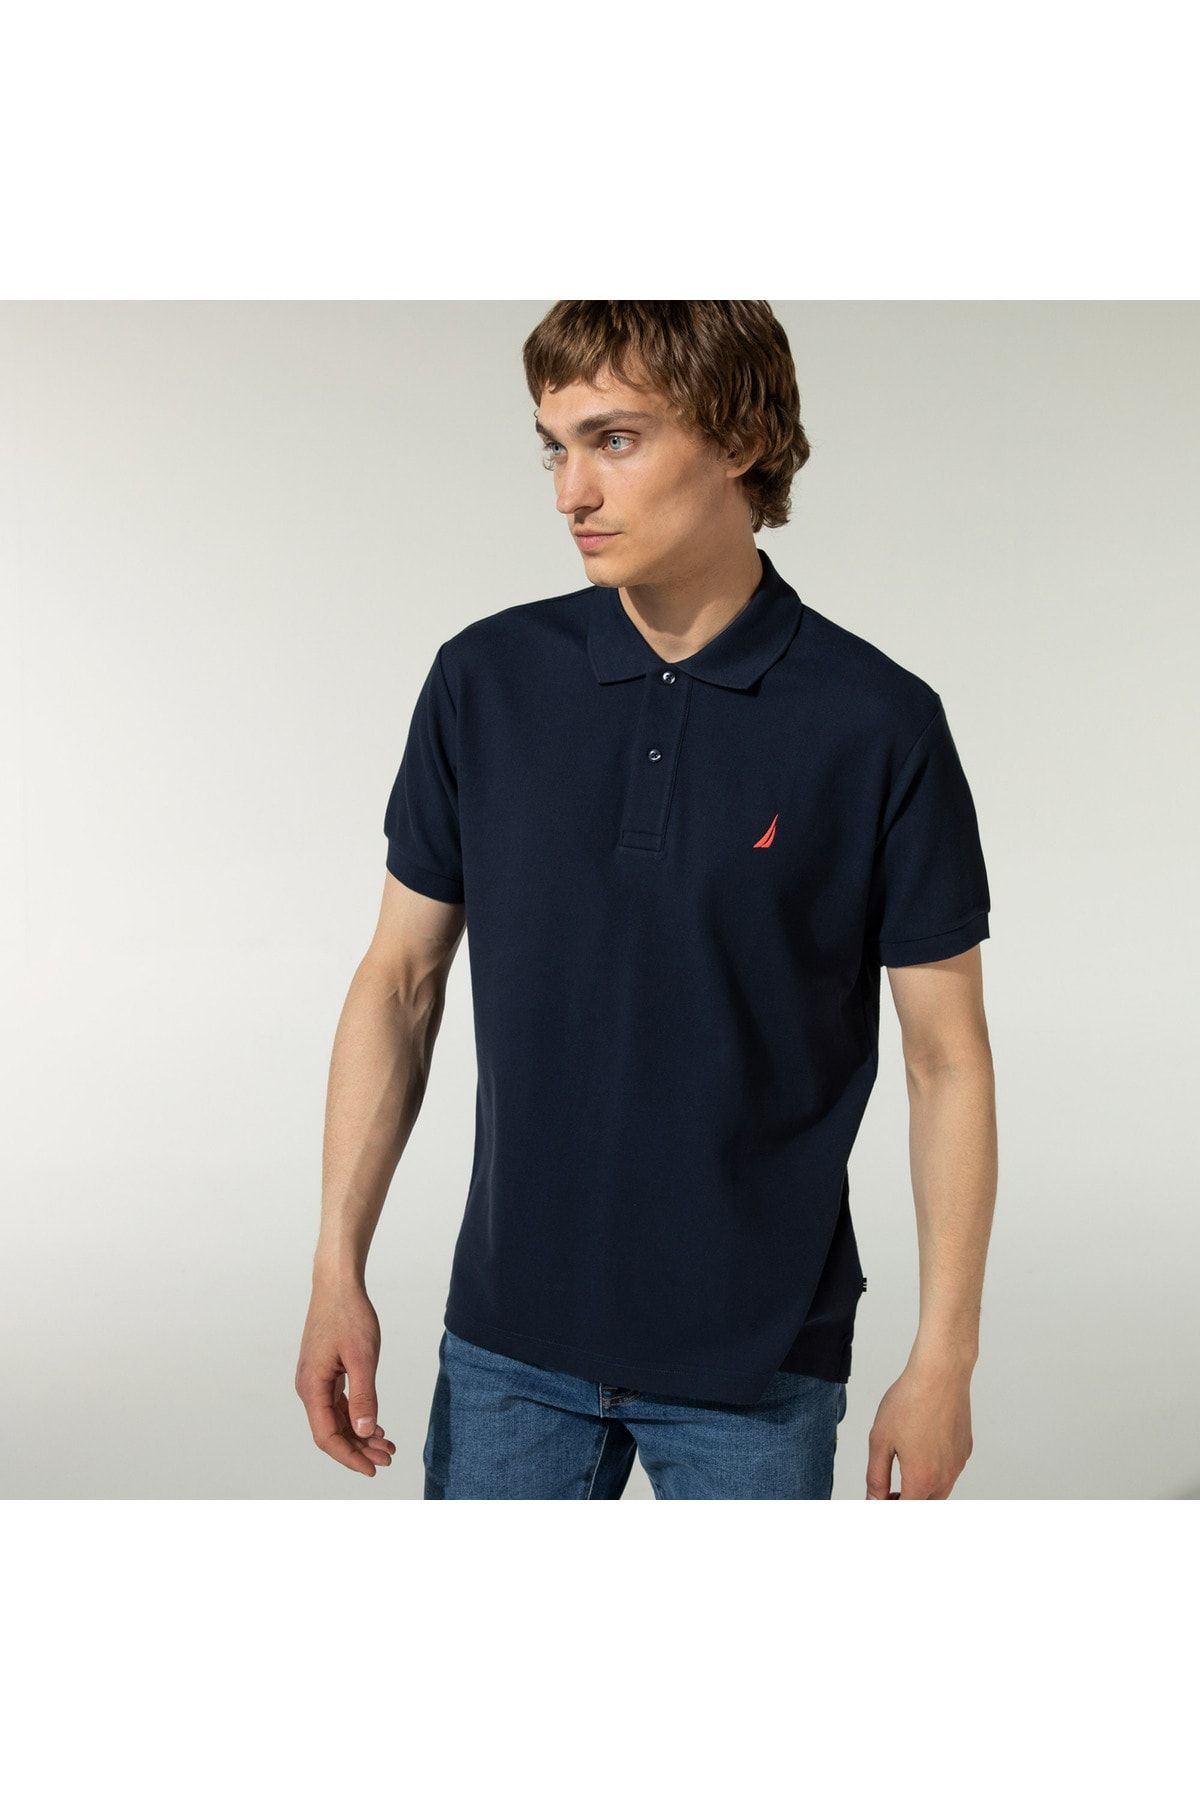 Nautica Mens Navy Blue Soft Polo Shirt Large New Logo MSRP $59.99 T-shirt  Stitch